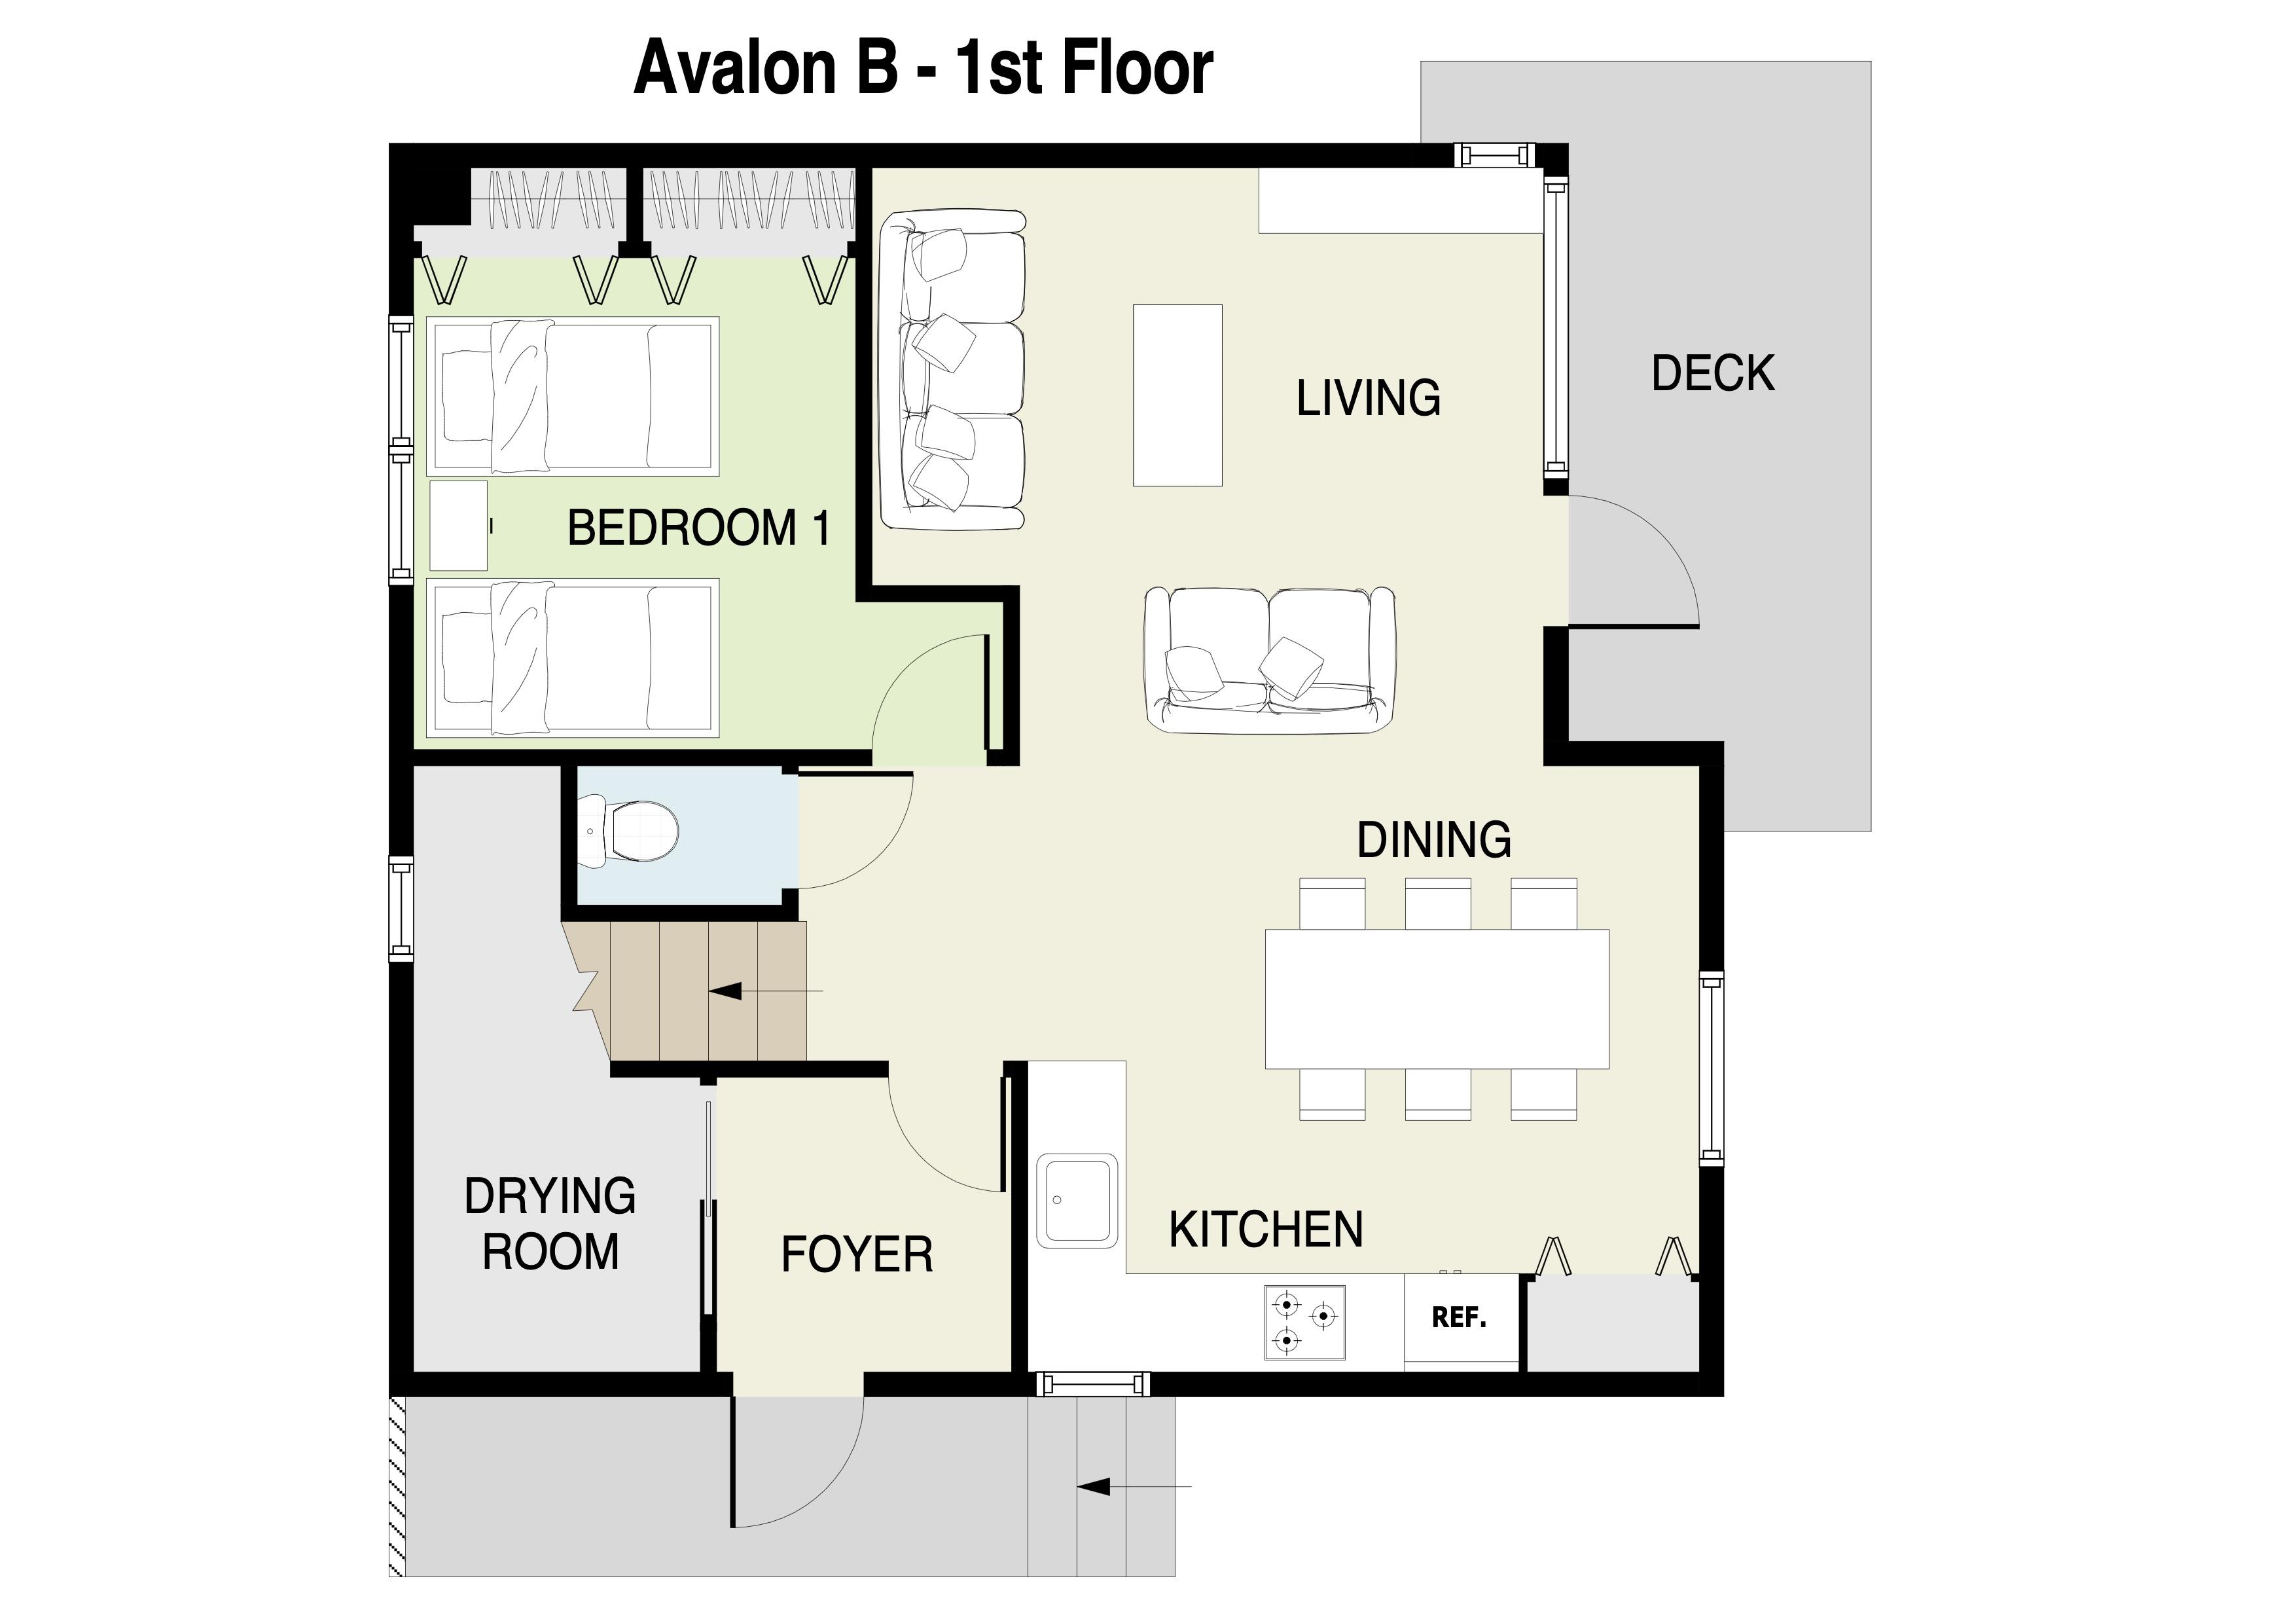 Avalon B 1st floor plans